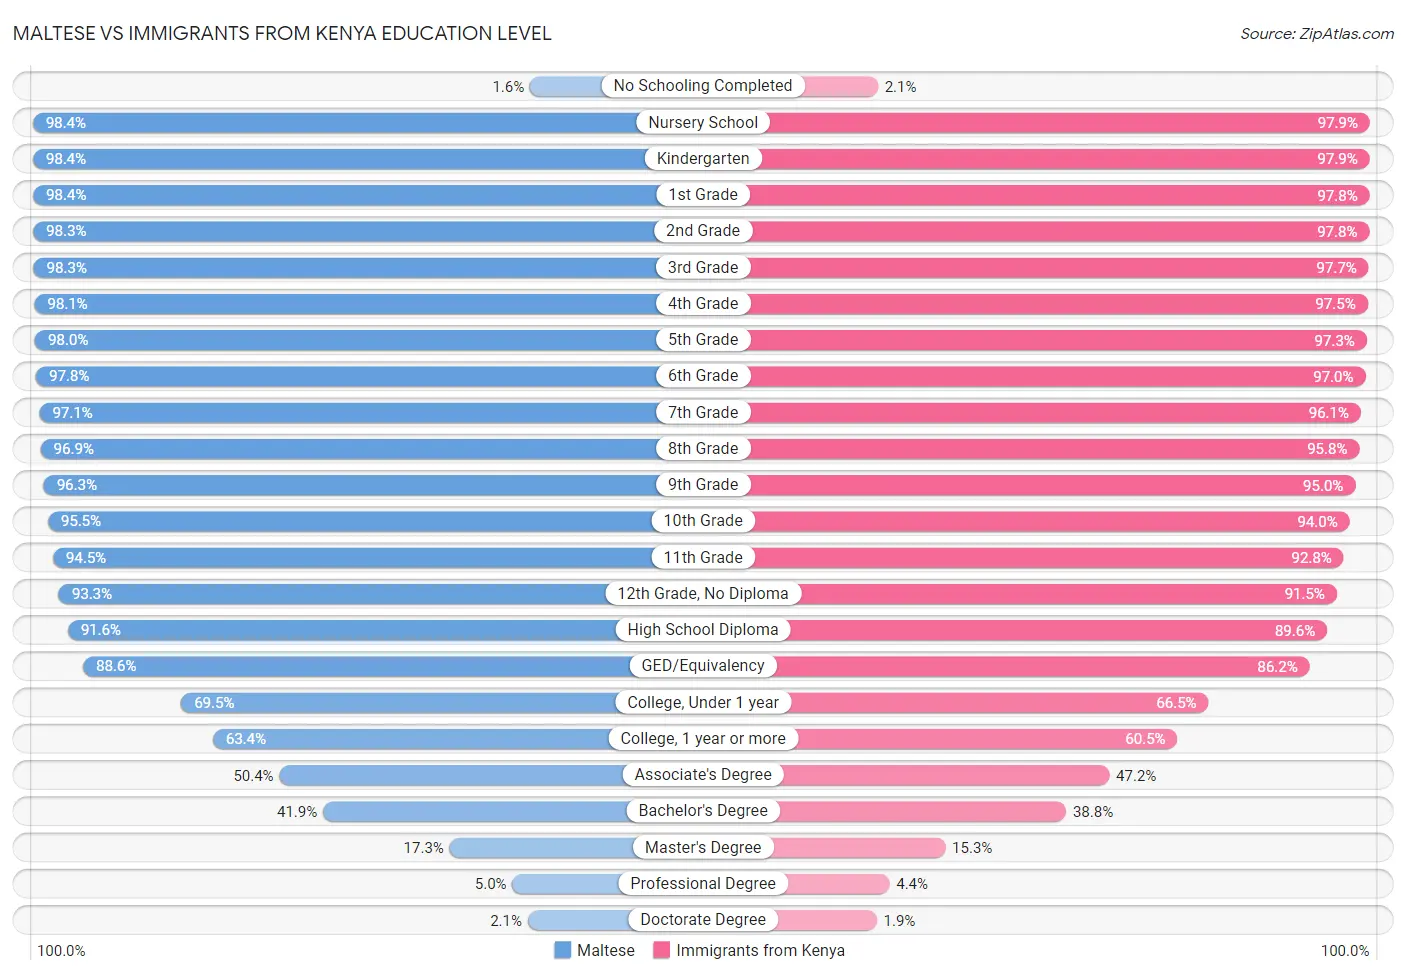 Maltese vs Immigrants from Kenya Education Level